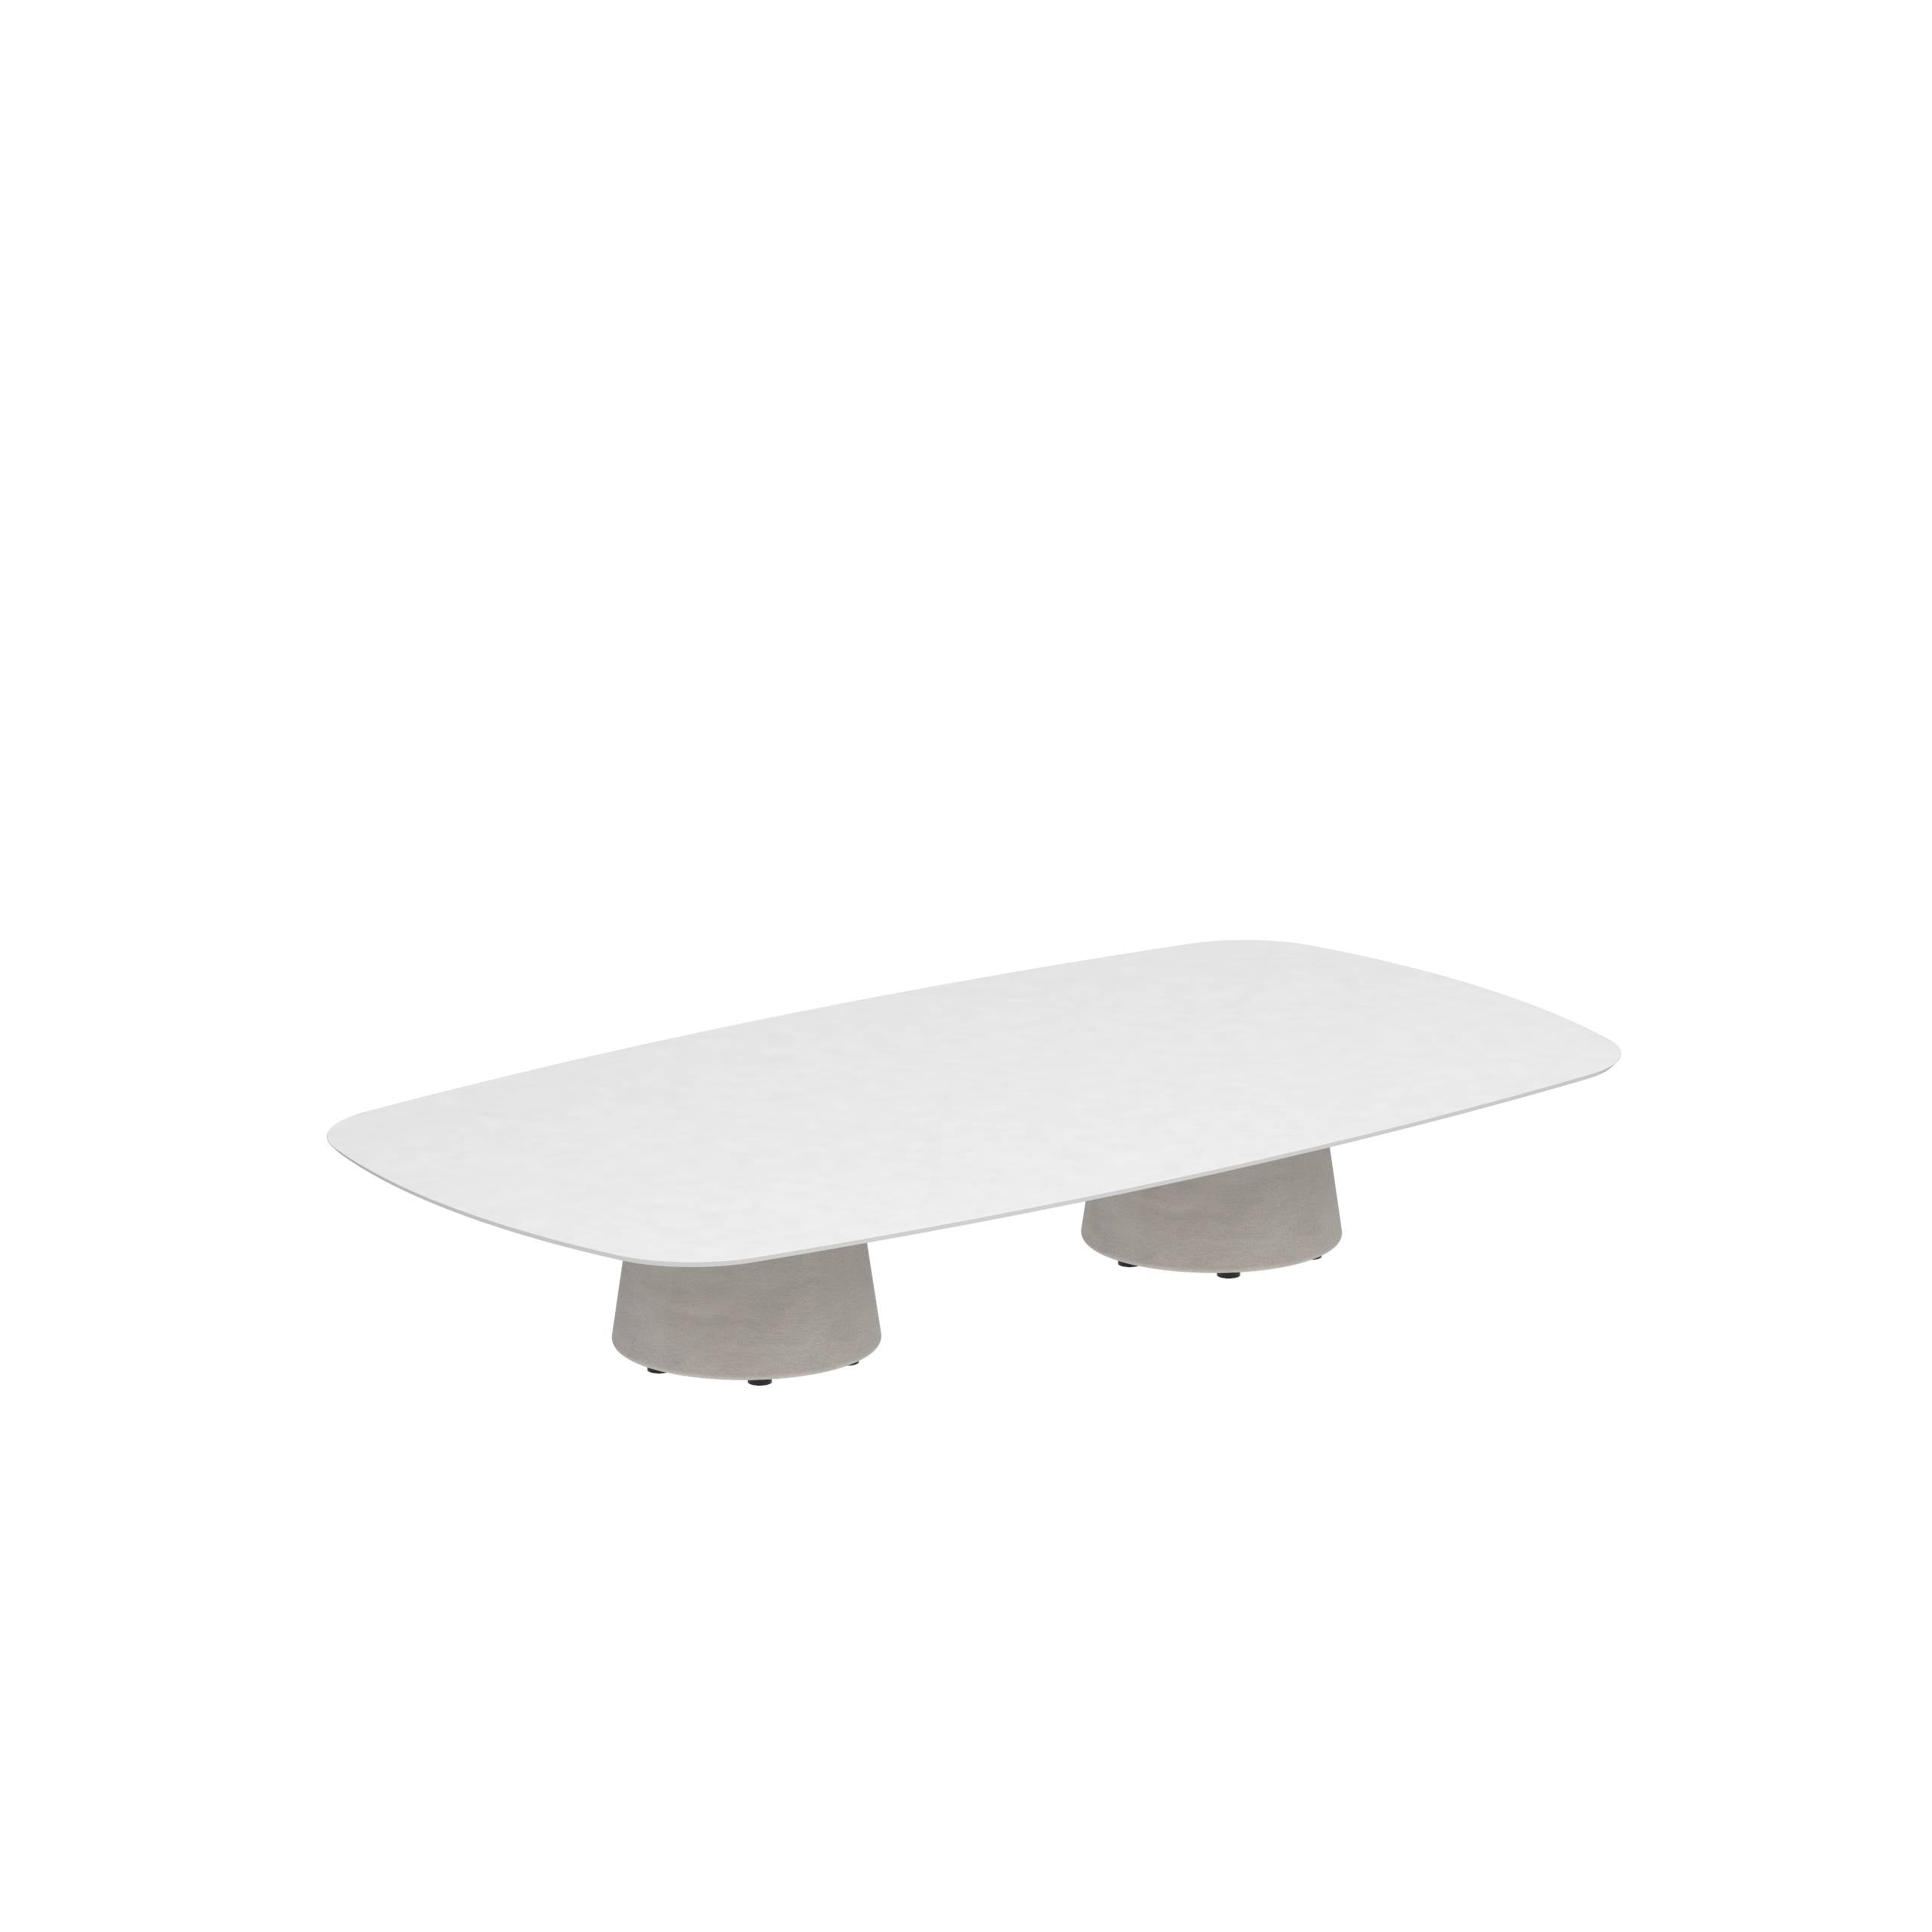 Conix Table 220x120 Cm Low Lounge Legs Concrete Cement Grey - Table Top Ceramic White